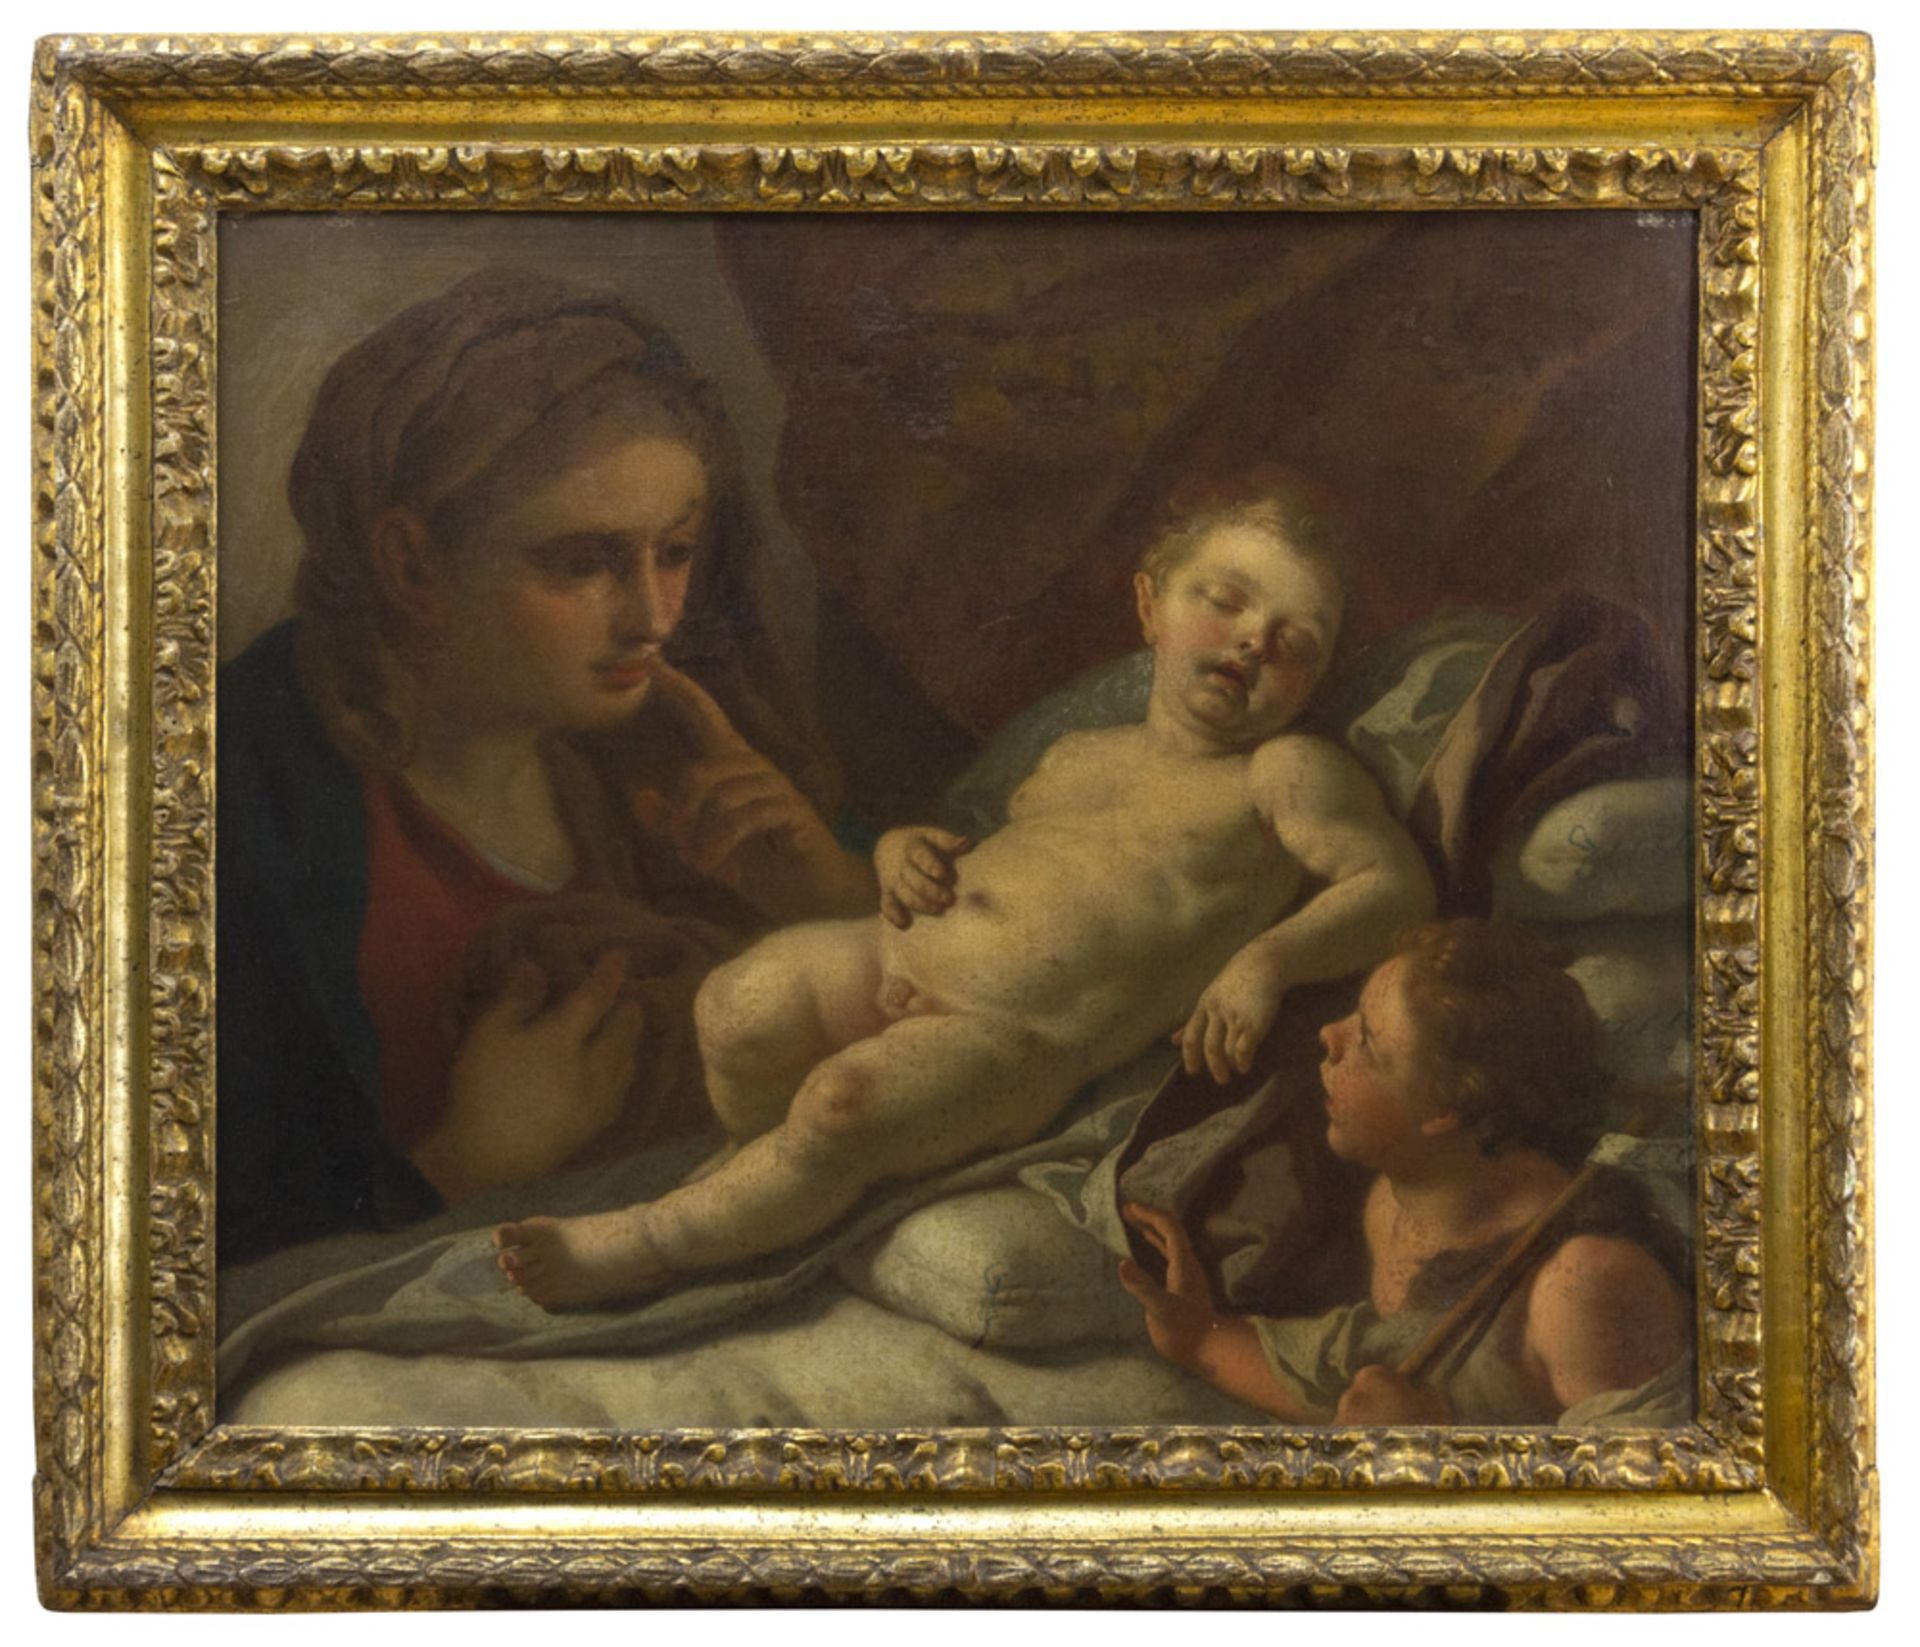 FRANCESCO DE MURA, att.to (Naples 1696 - 1782) THE ADORATION OF THE CHILD Oil on canvas, cm. 63 x 76